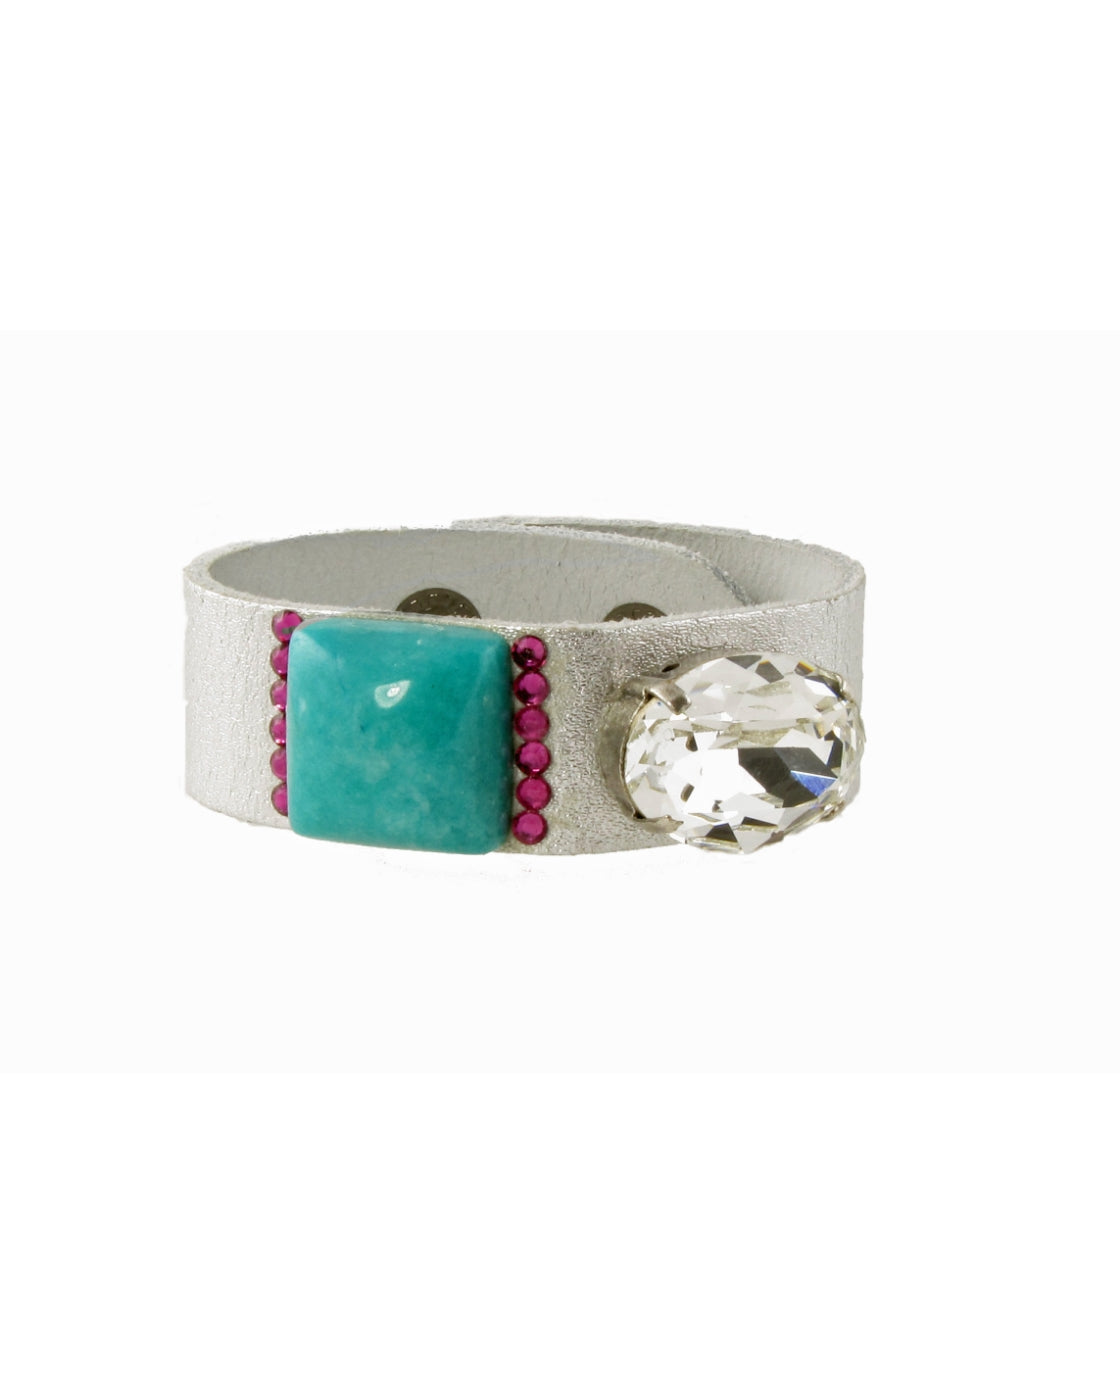 MANIA- Silver leather cuff bracelet with swarovski crystal and gemstone -maria-moyseos